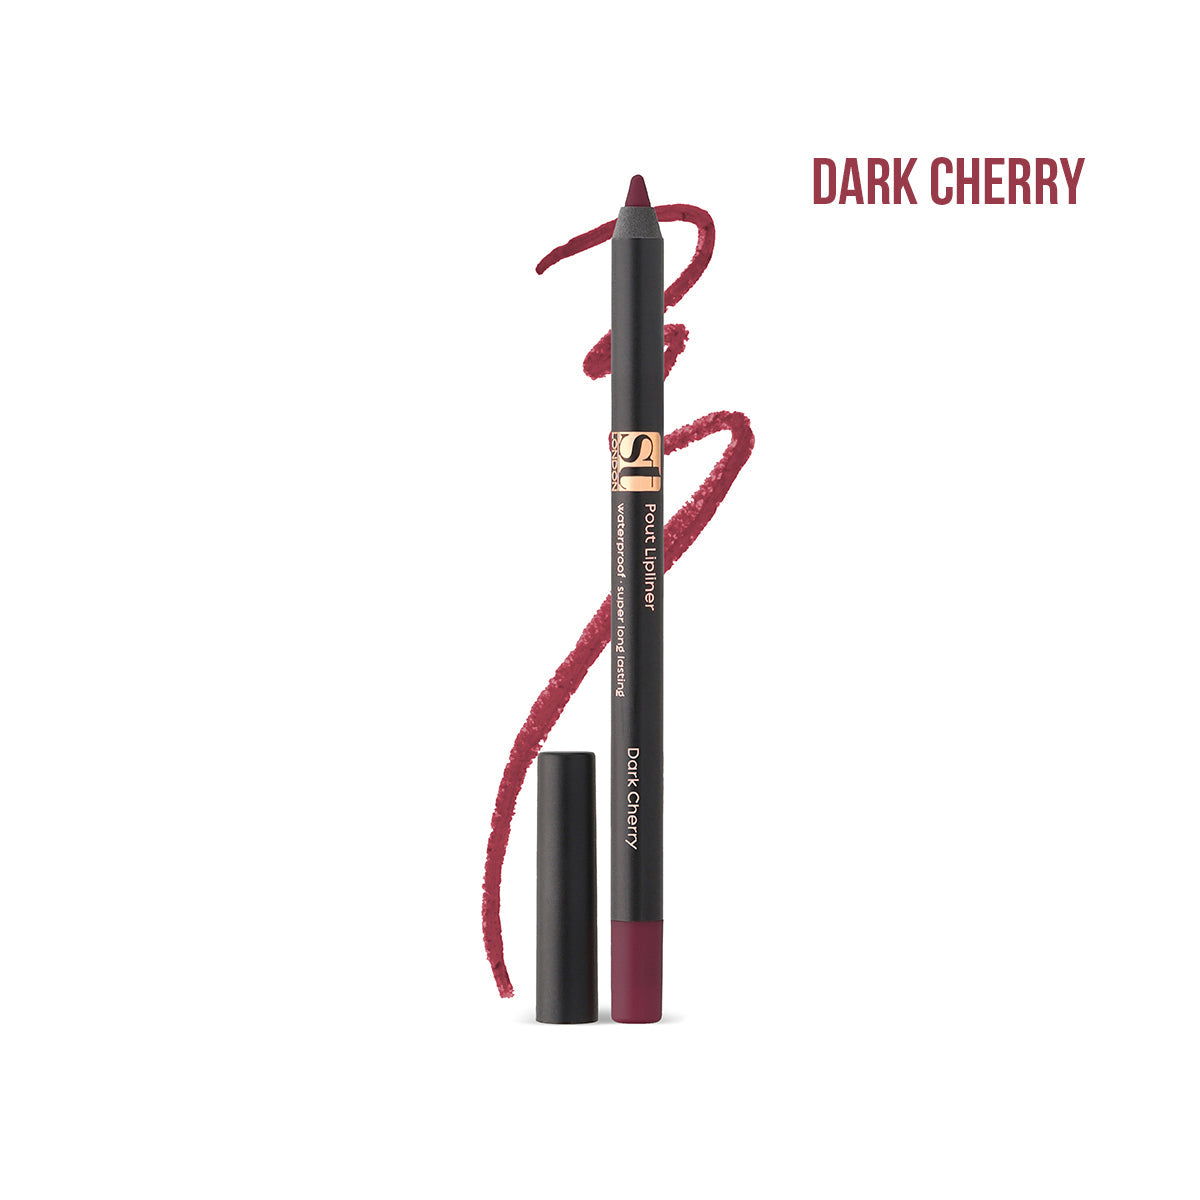 St London - Pout Lipliner - Dark Cherry